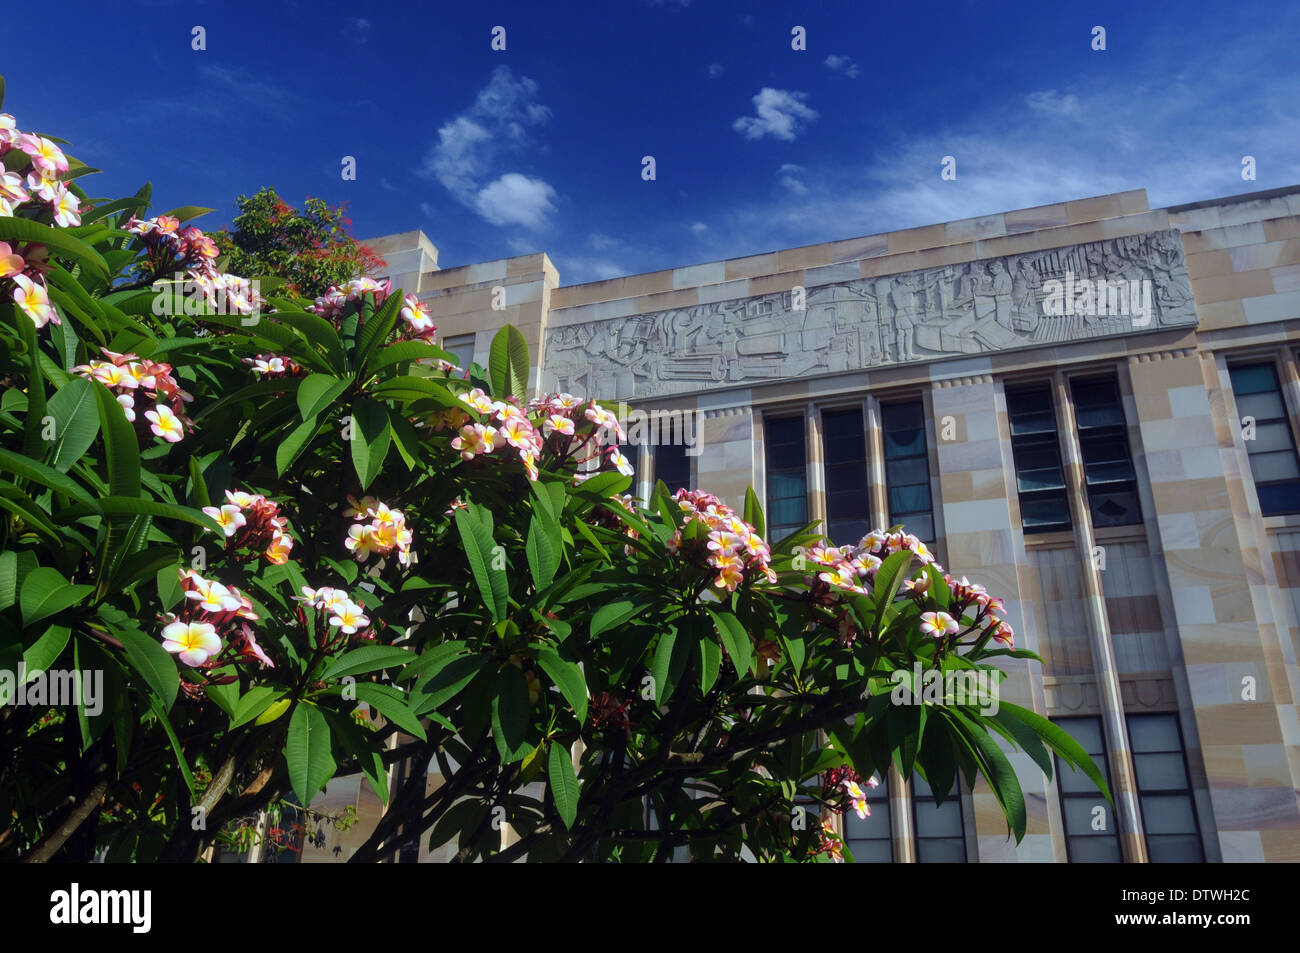 Flowering frangipani tree (Plumeria sp.) and sandstone buildings of the University of Queensland, Brisbane, Australia Stock Photo